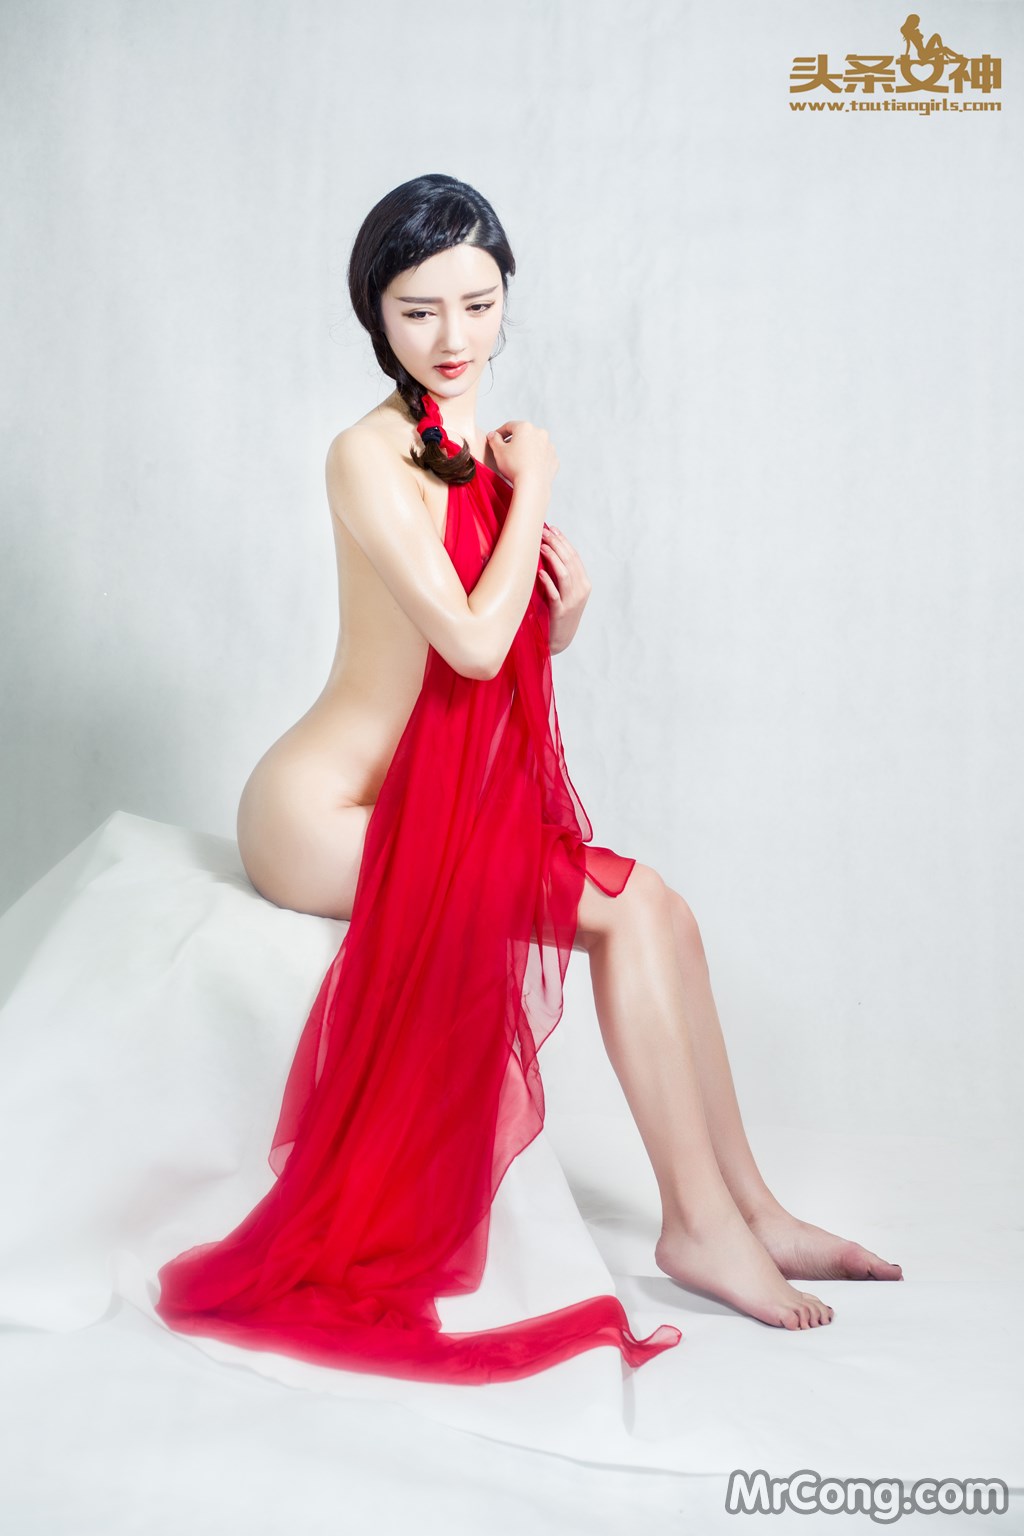 TouTiao 2016-06-25: Model Guo Wan Ting (郭婉婷) (43 photos) photo 1-13